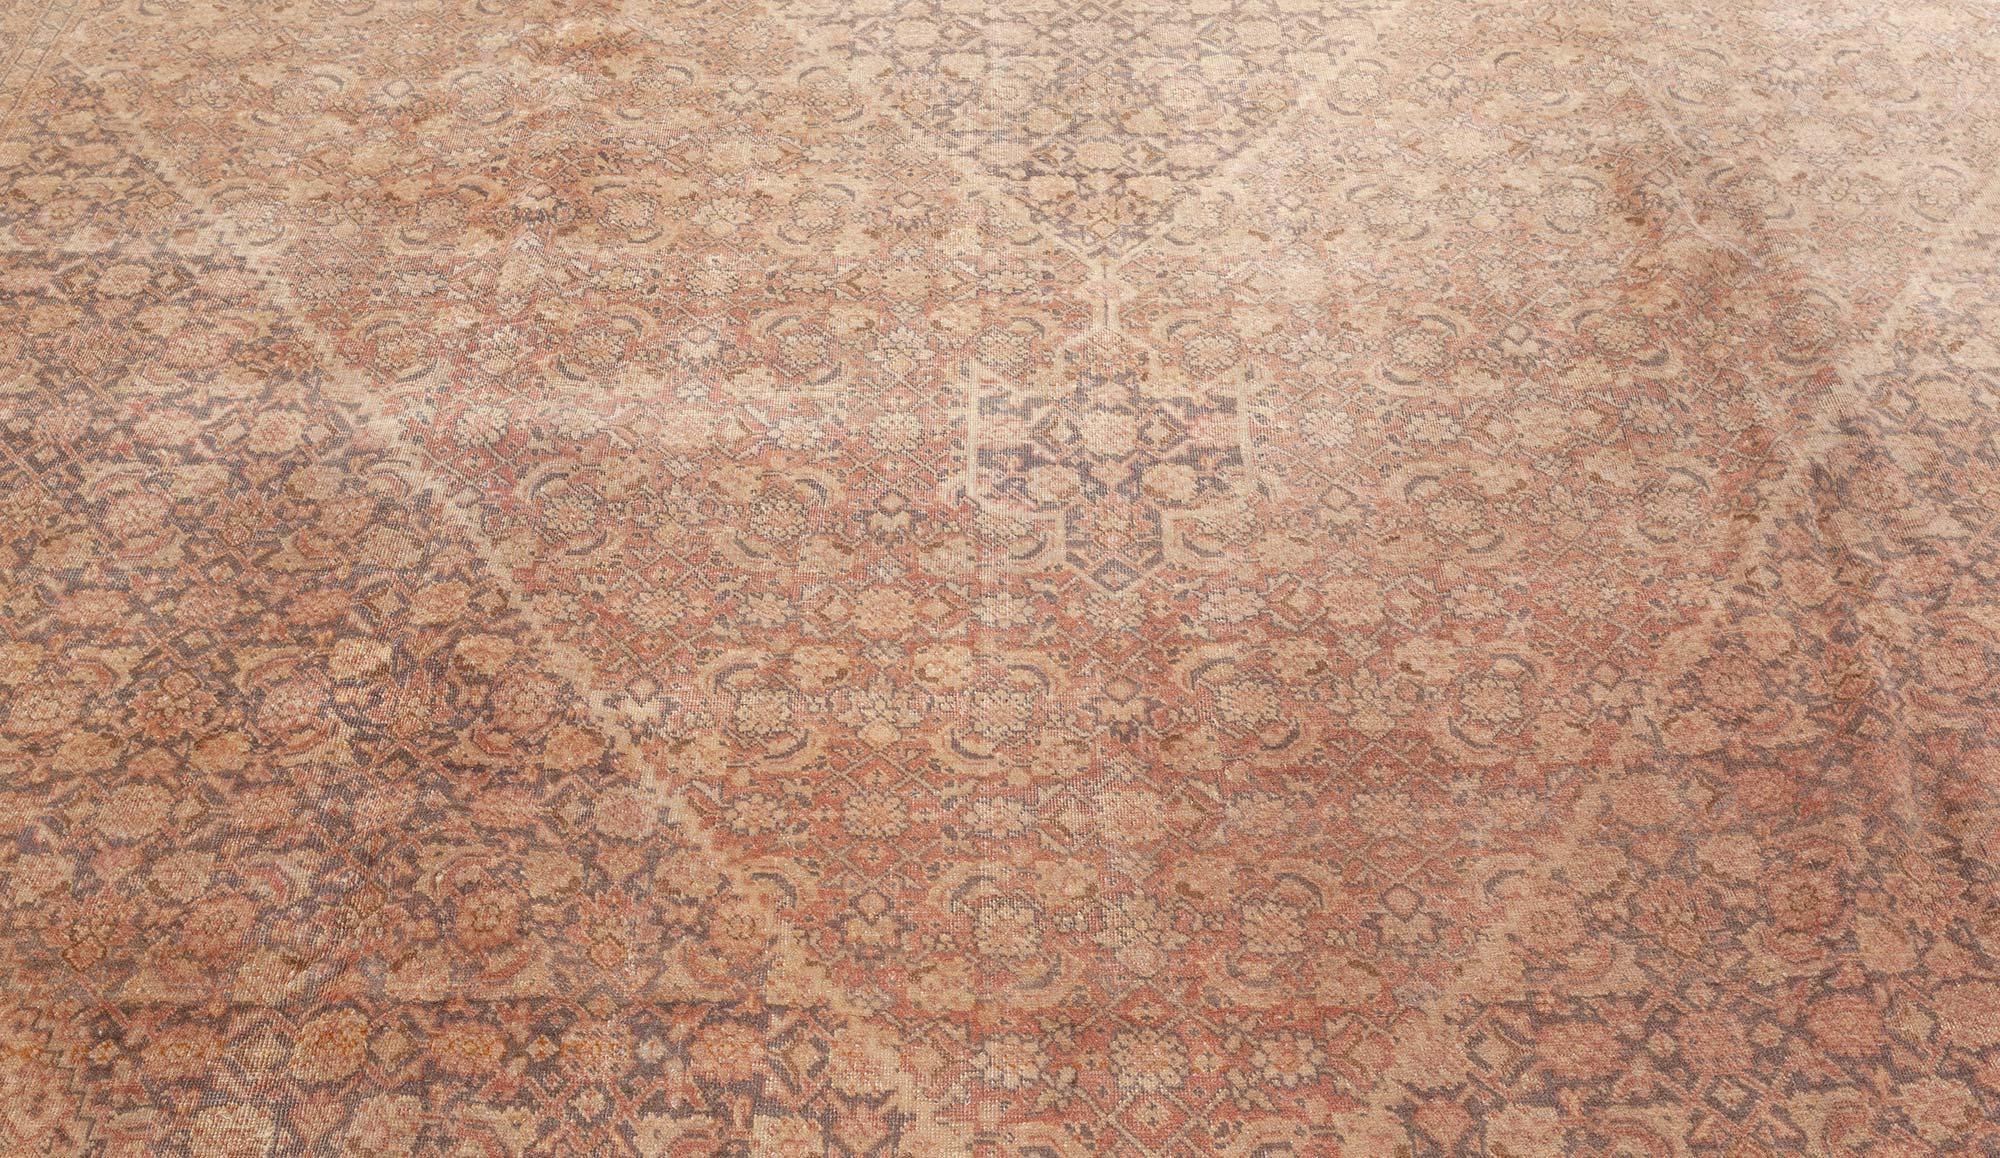 Hand-Woven Antique Persian Tabriz Brown Handmade Wool Carpet For Sale